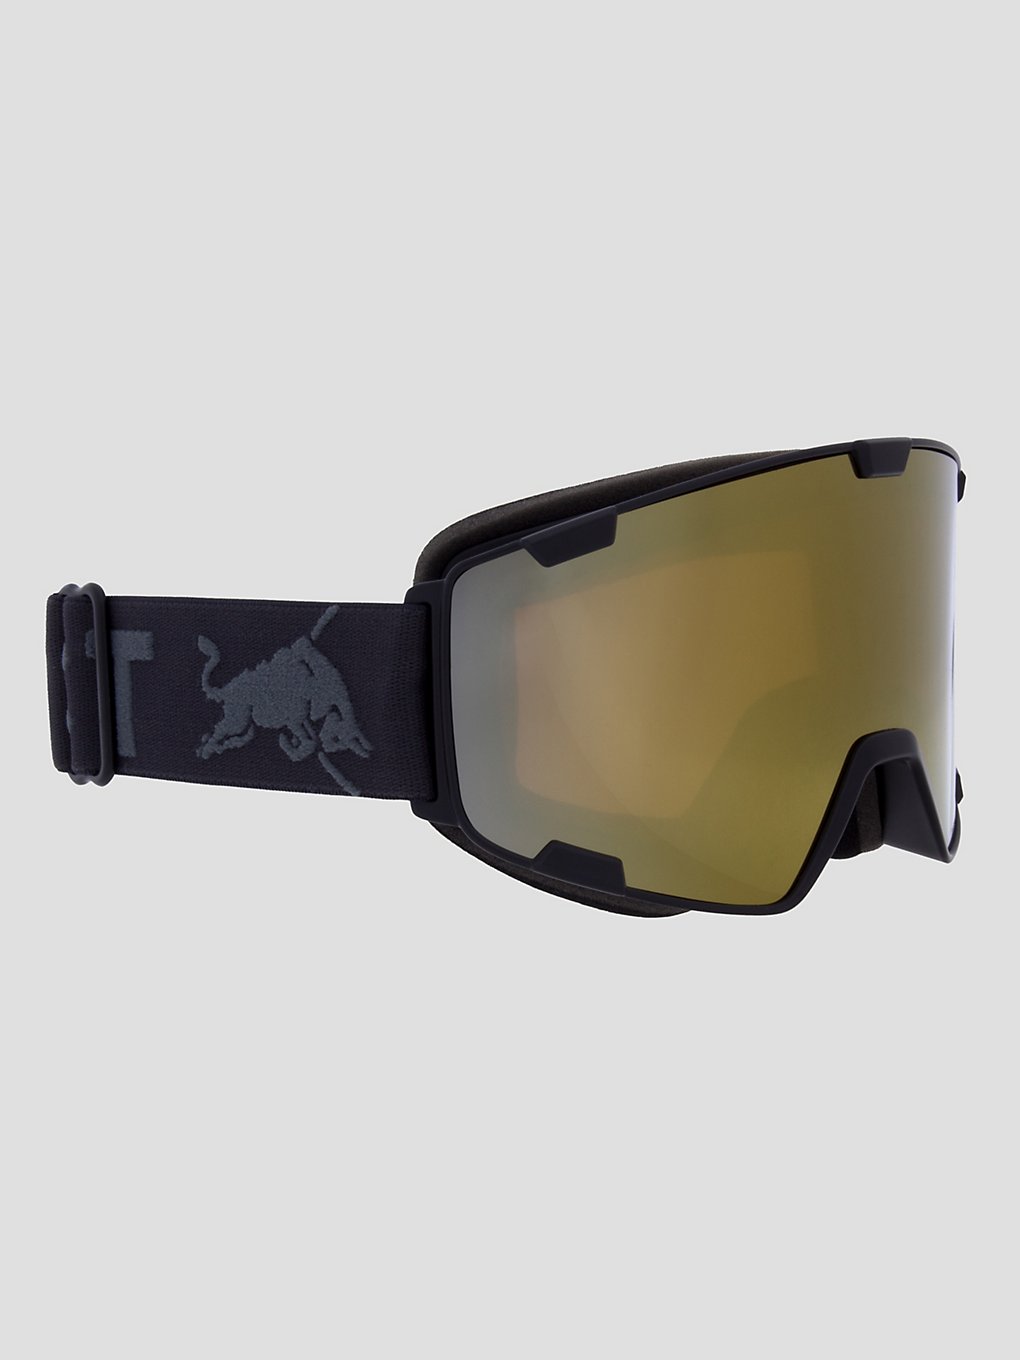 Red Bull SPECT Eyewear Park Black Goggle org w gd mr cat s3 kaufen